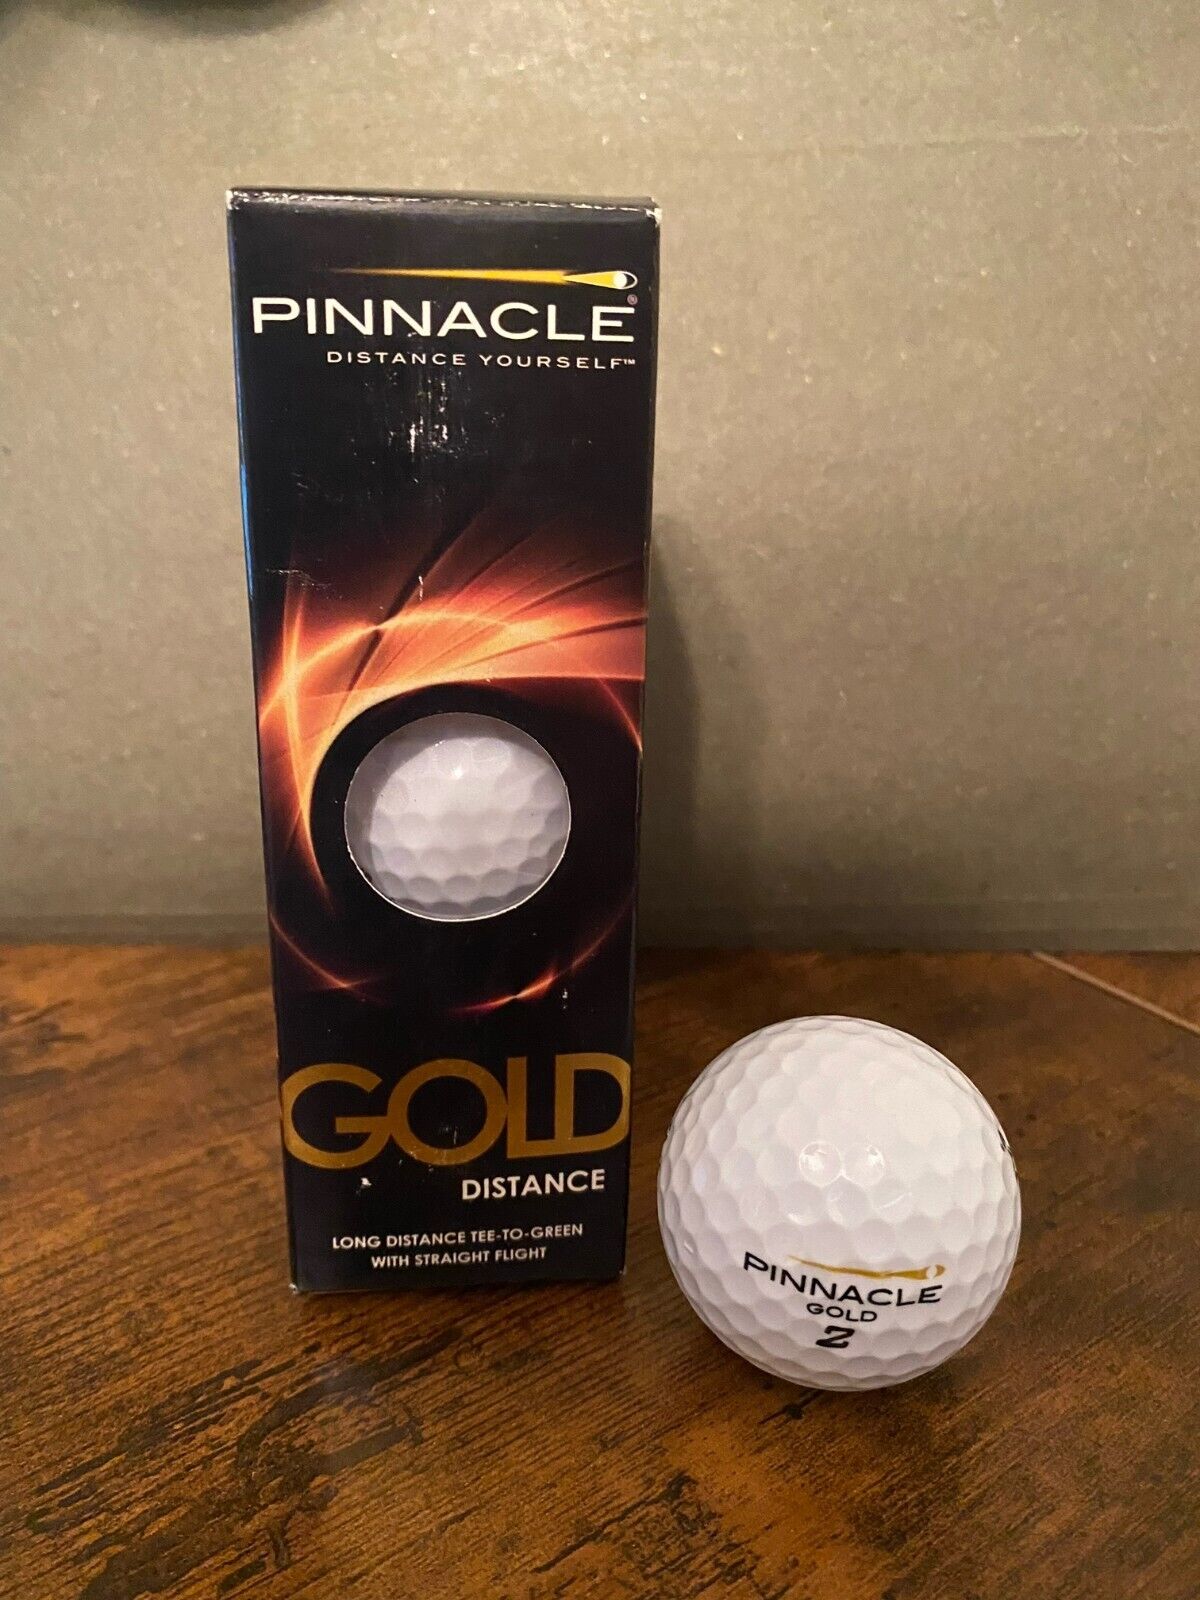 Pinnacle GOLD Distance Golf Balls, Sleeve of Three Balls.